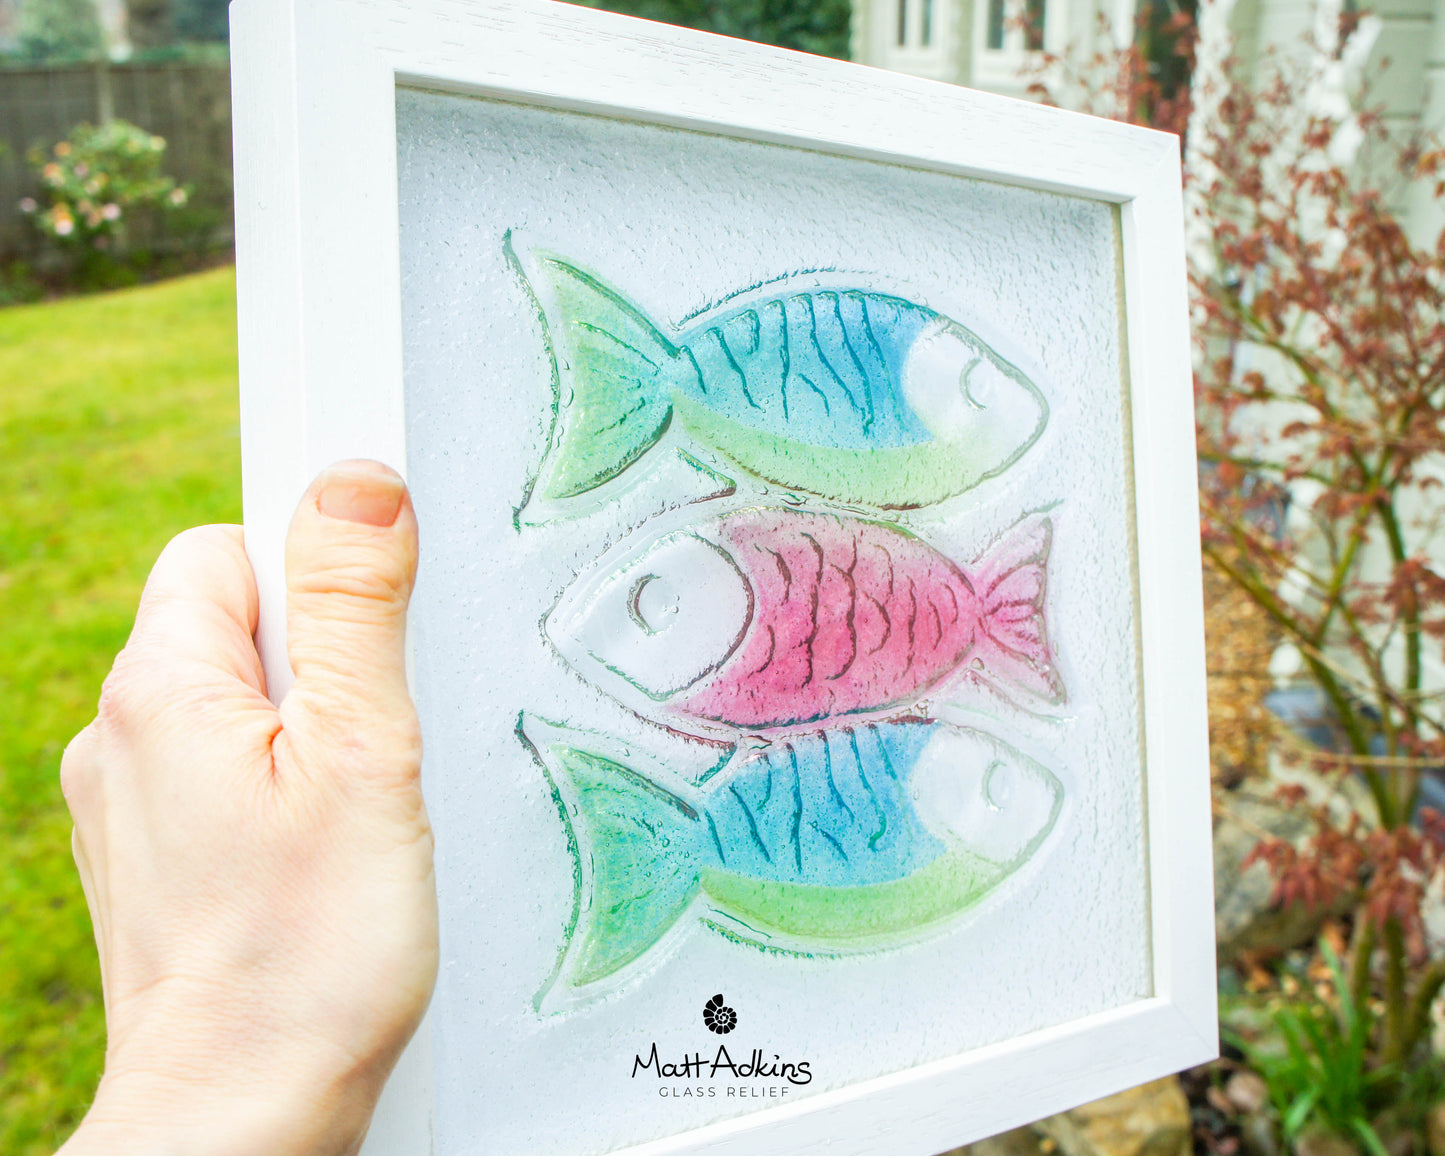 3 Fish Glass Art 25x25cm (10"x10") - Blue Cherry Green Fish Glass Framed Picture - Fish Coastal Wall Art